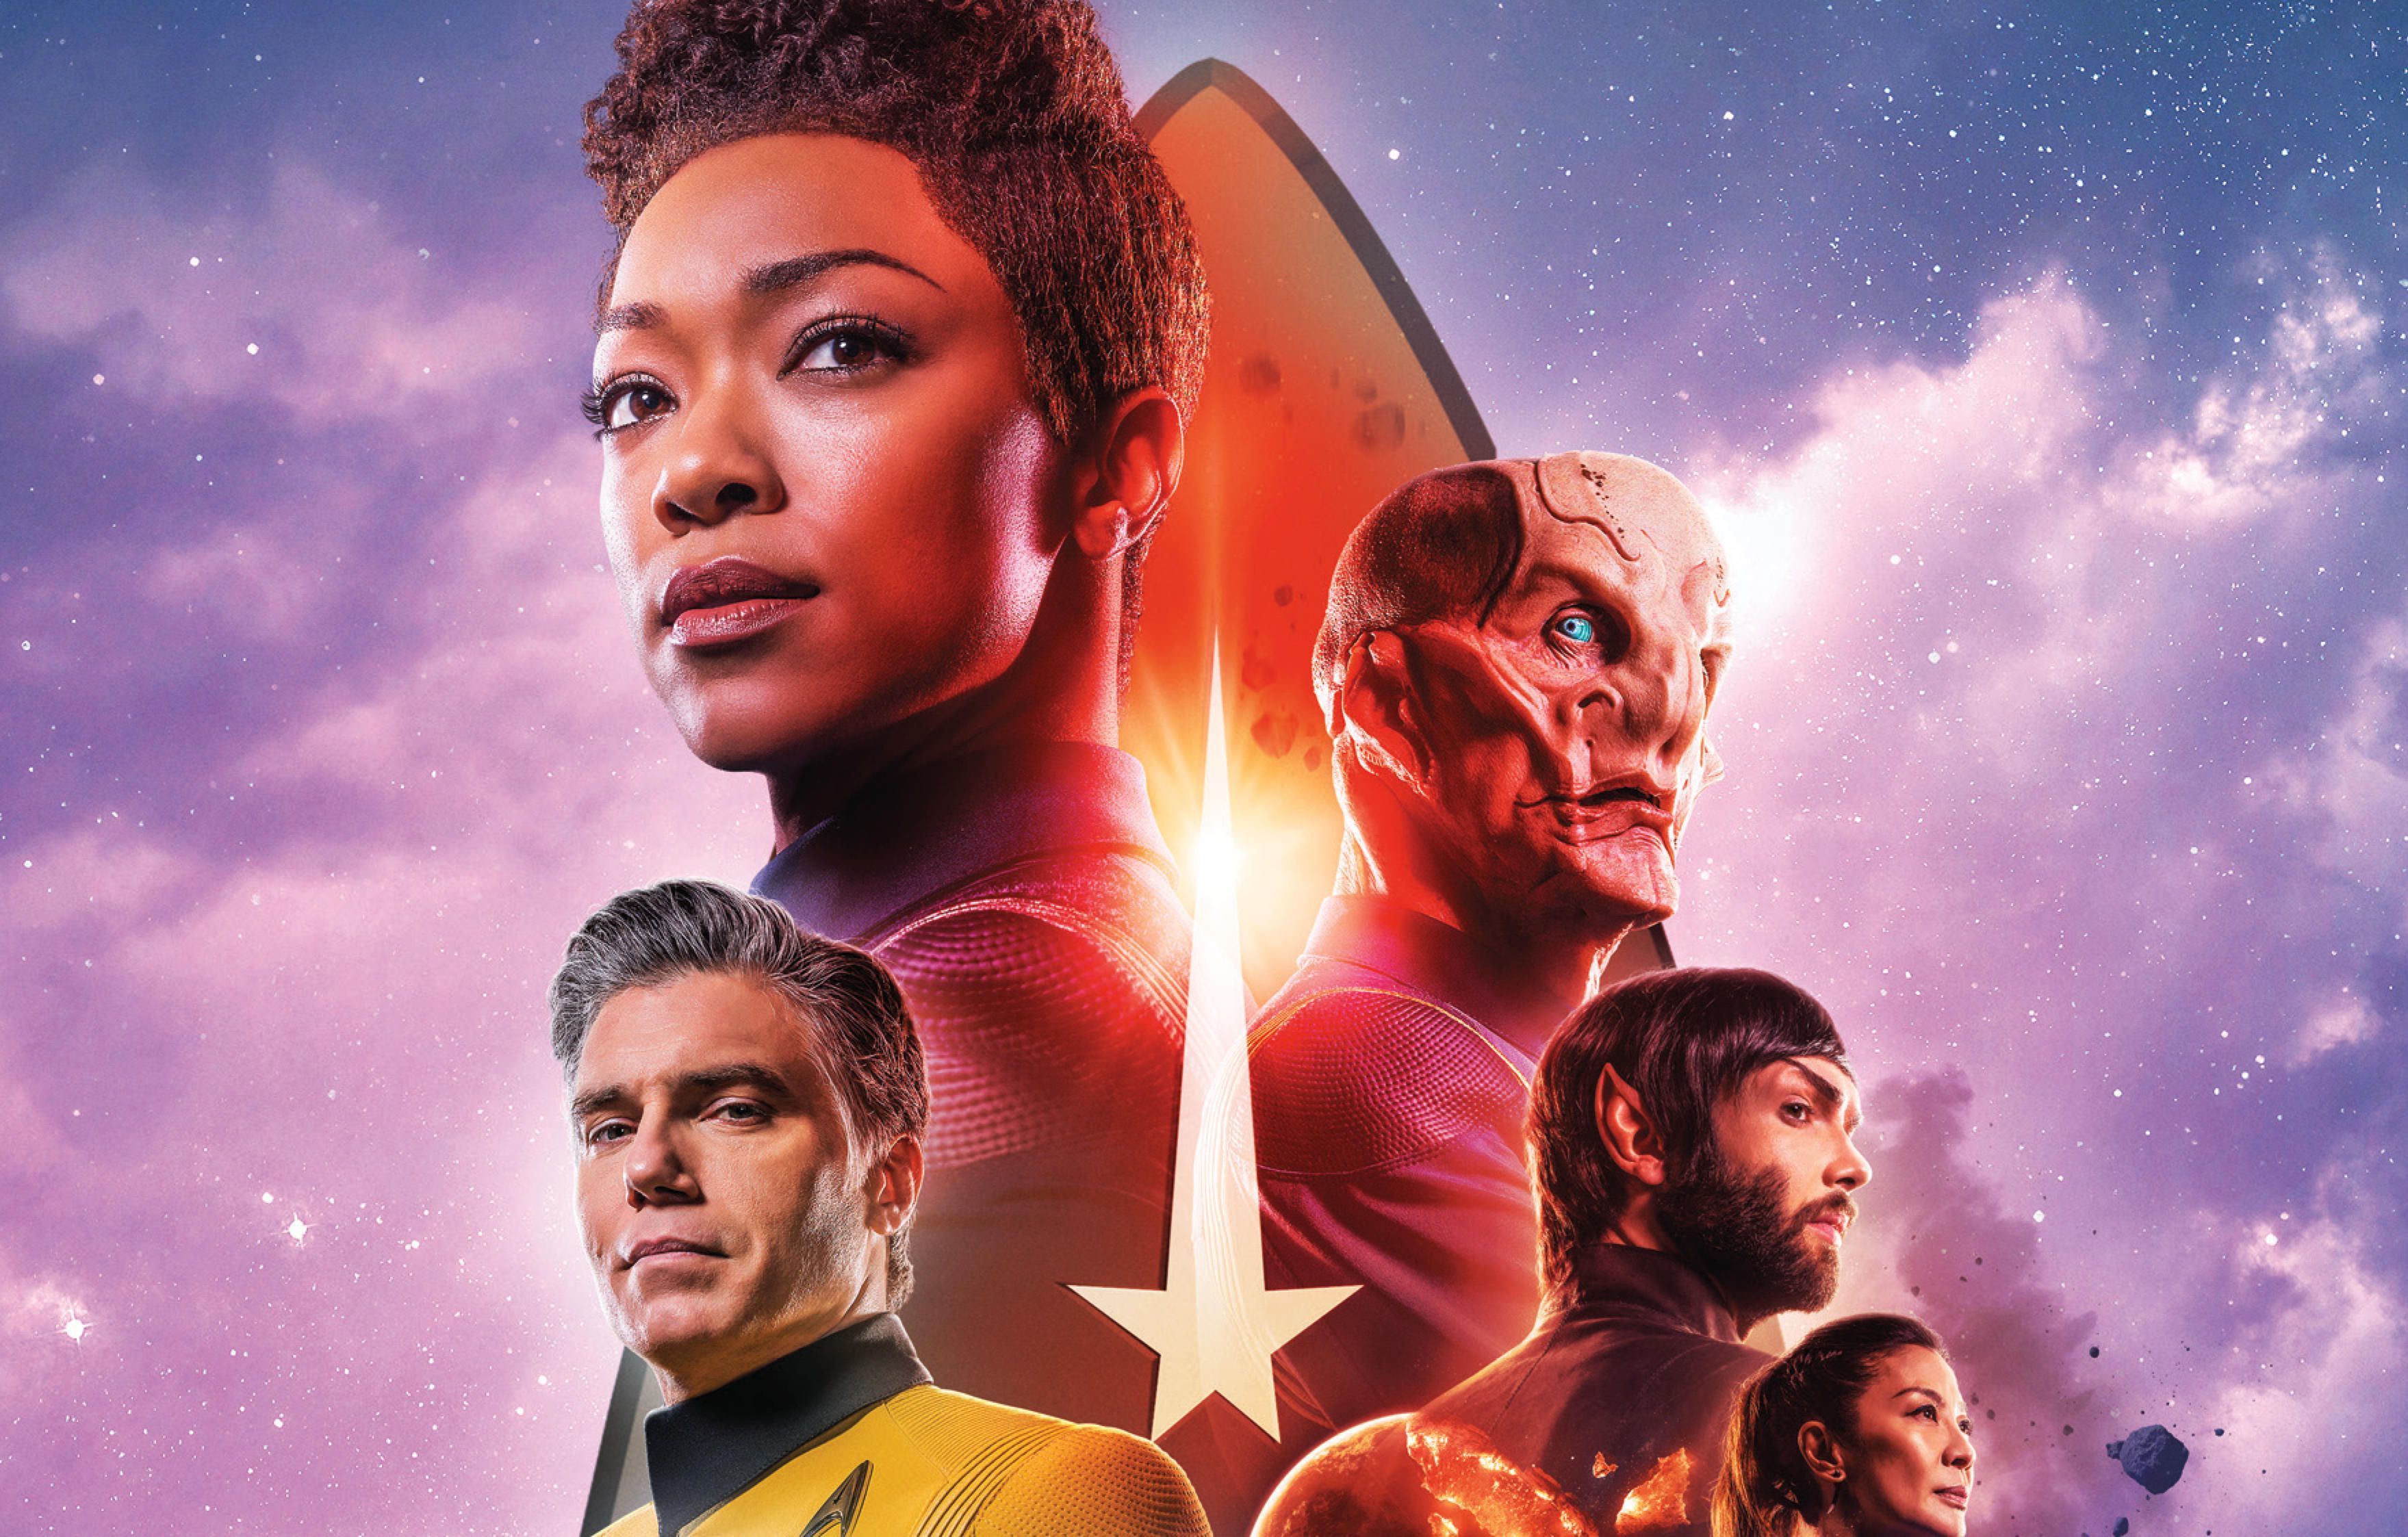 Star Trek Discovery Season 2 Poster Wallpaper, HD TV Series 4K Wallpaper, Image, Photo and Background